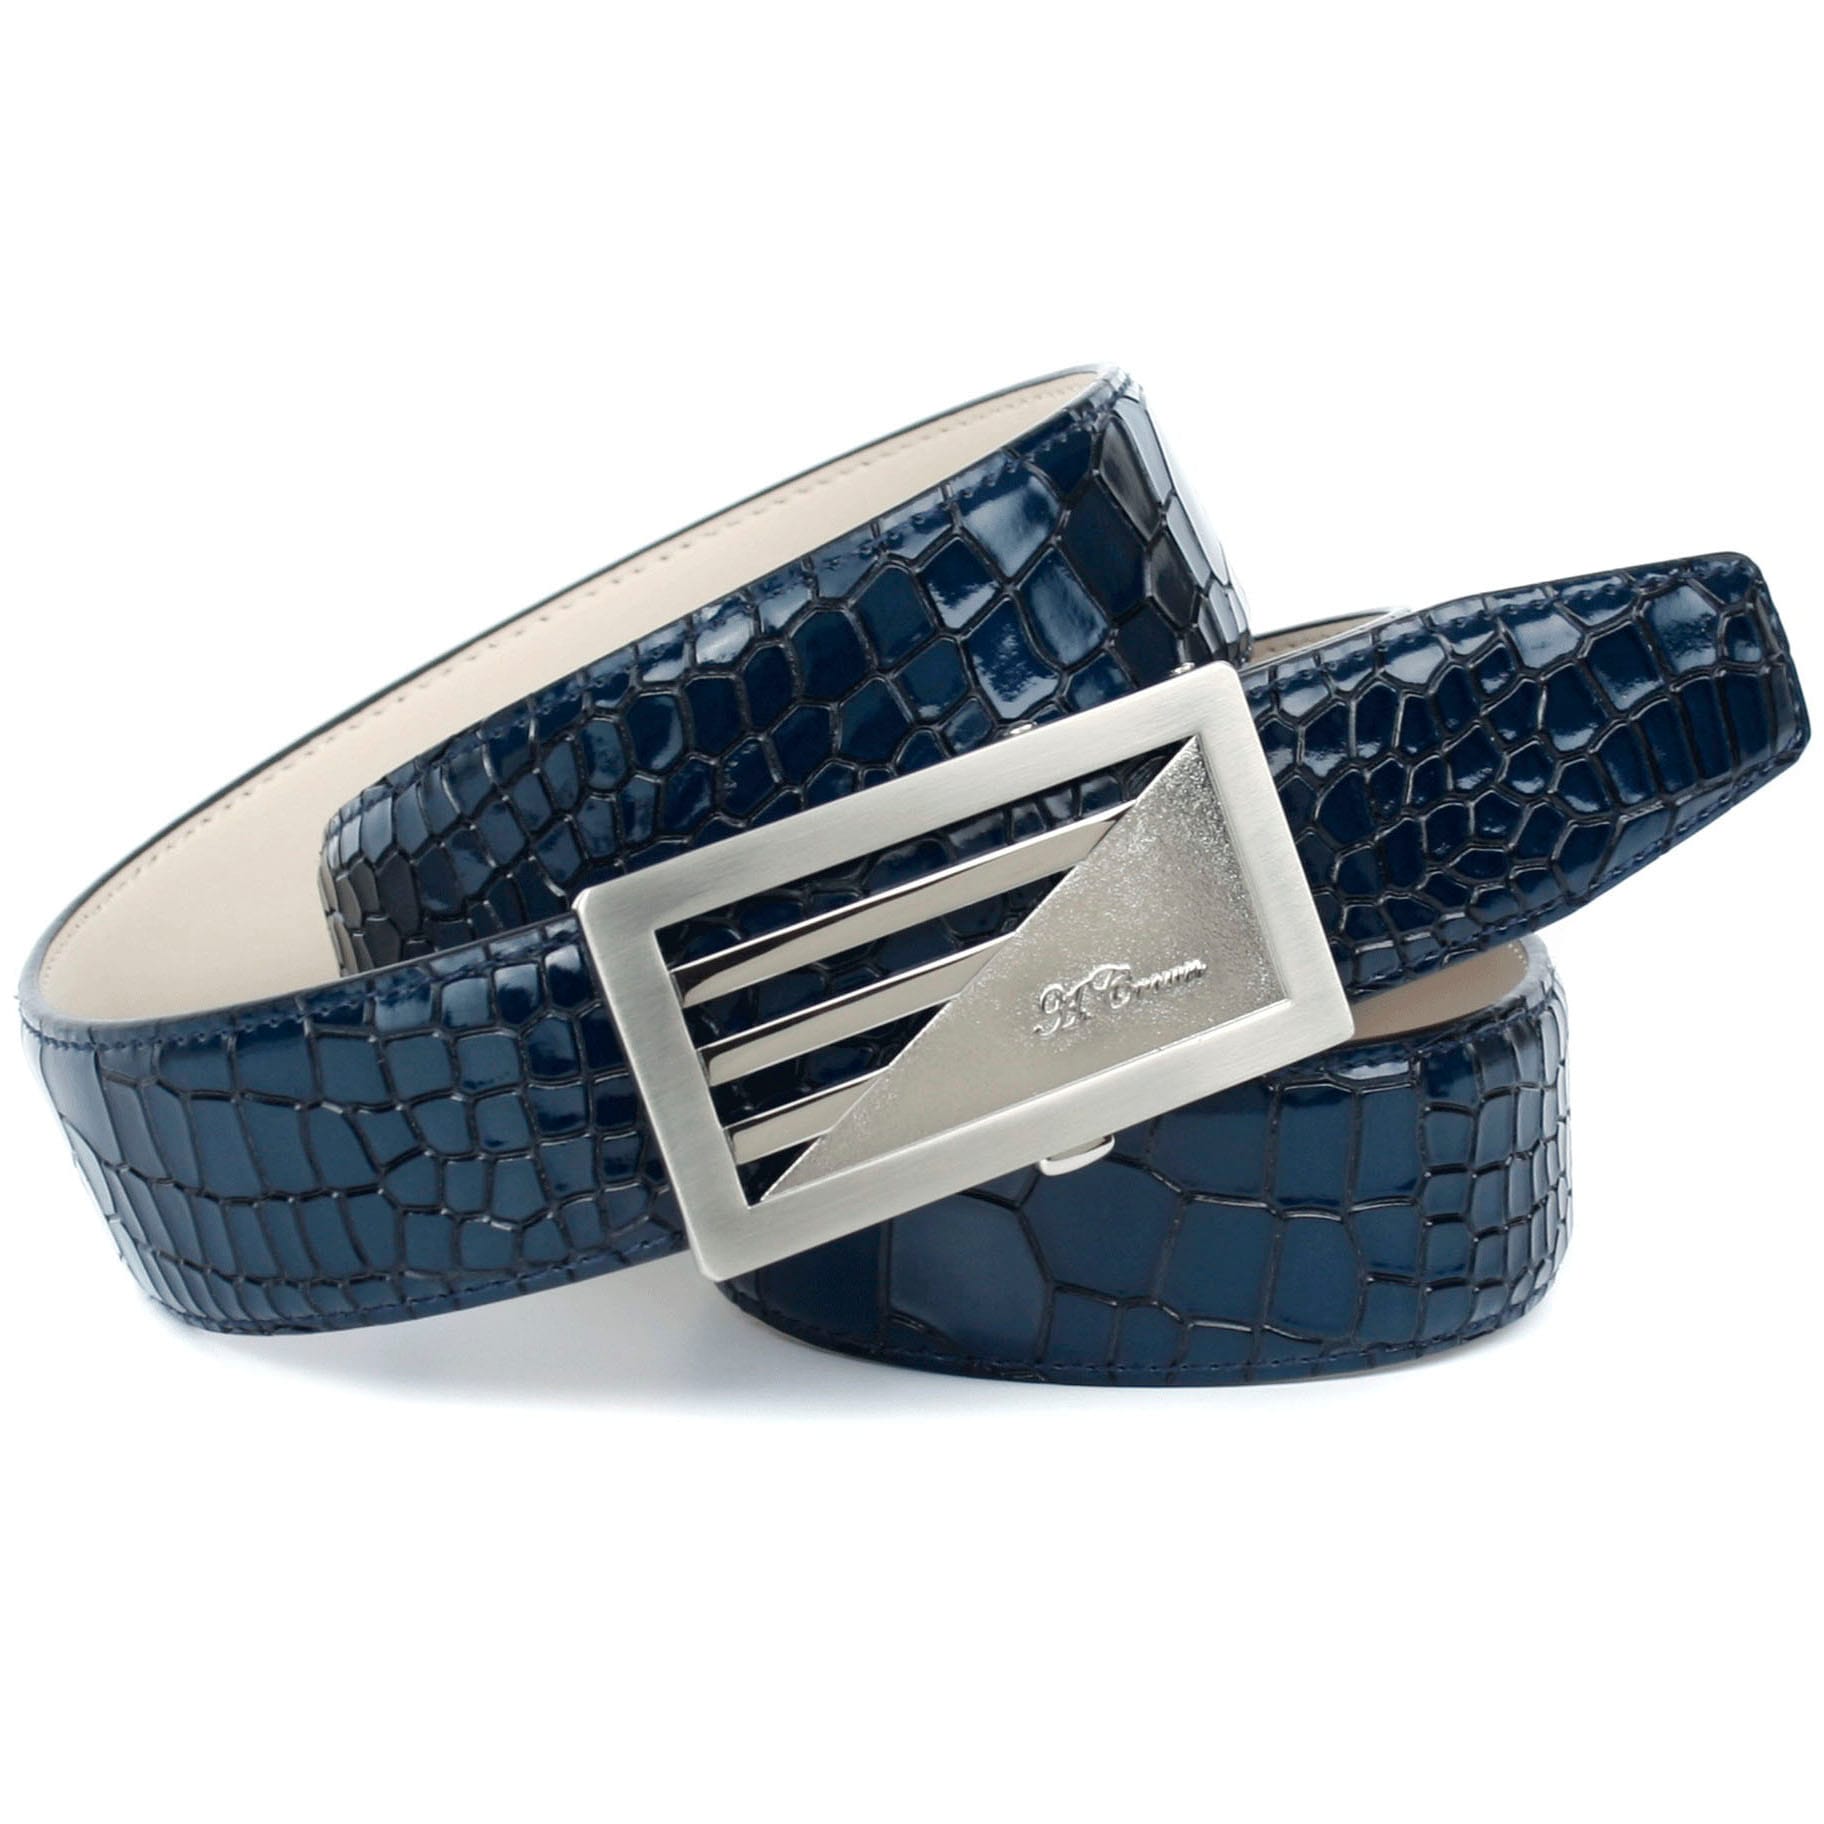 Anthoni Crown Ledergürtel, in Kroko-Design in blau bequem bestellen